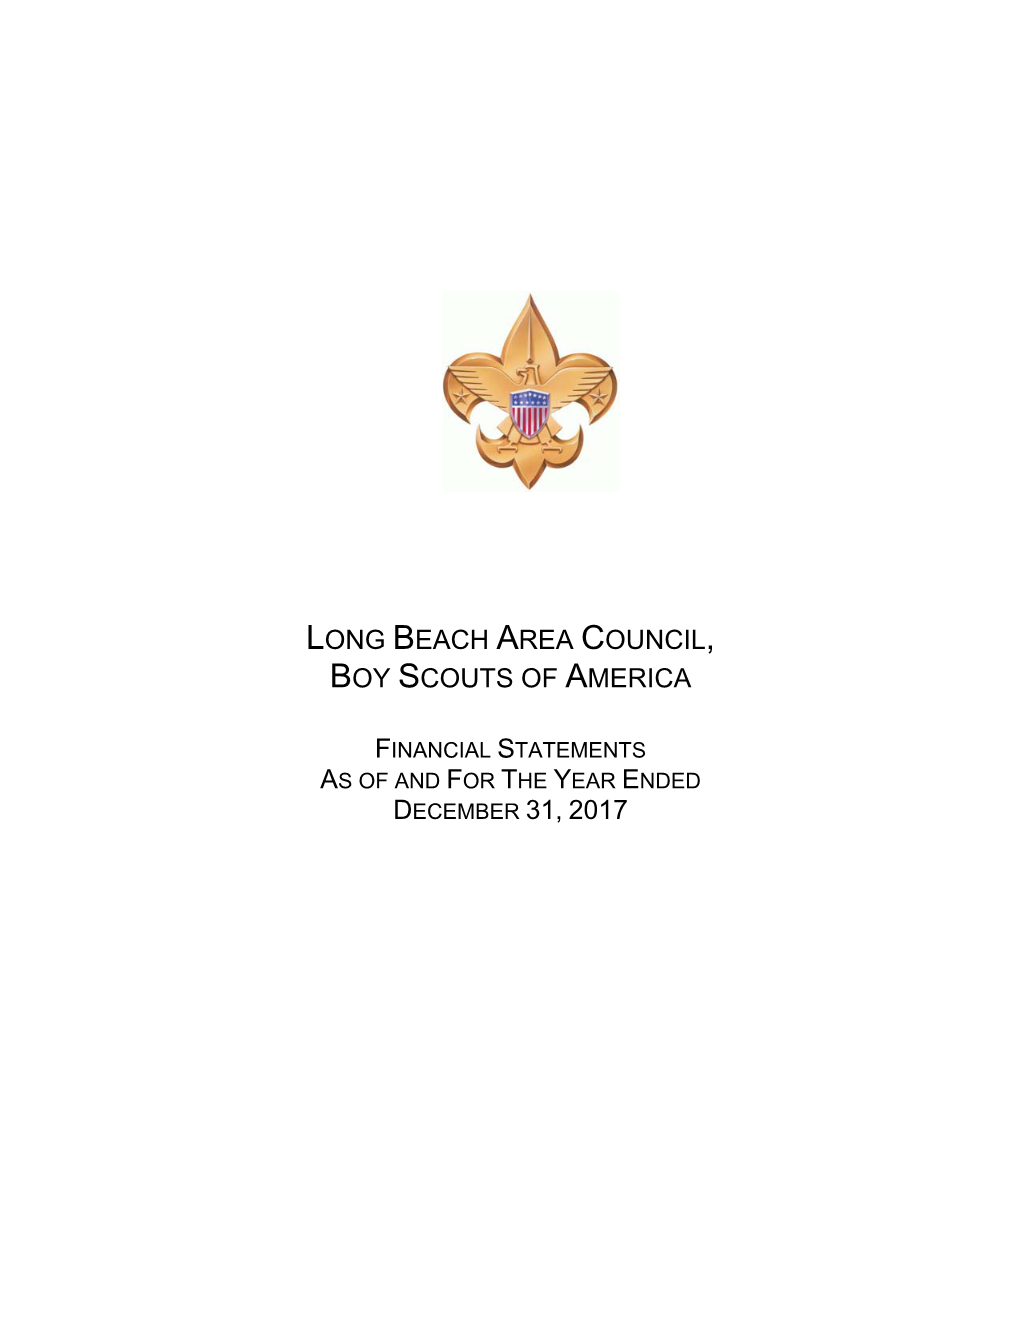 Long Beach Area Council, Boy Scouts of America